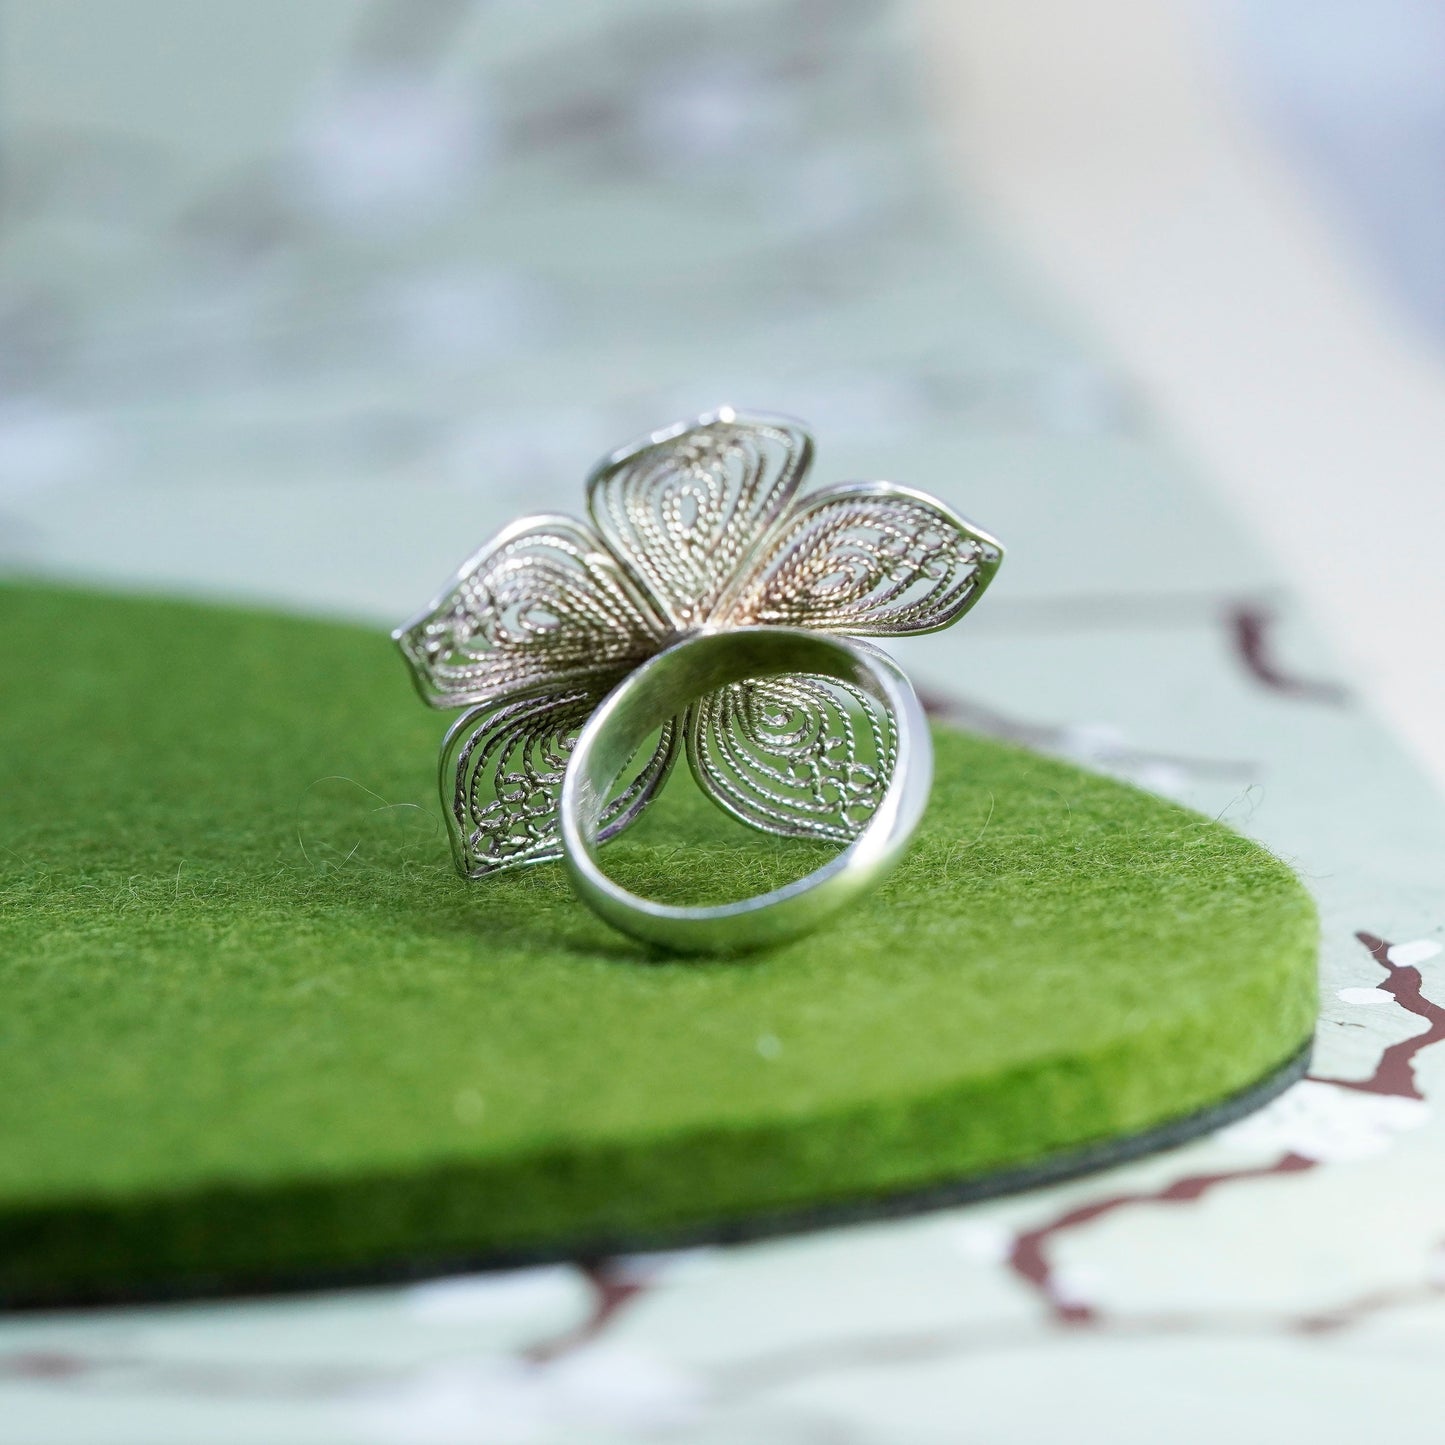 Size 8.5, vintage Sterling silver handmade ring, 925 filigree flower band